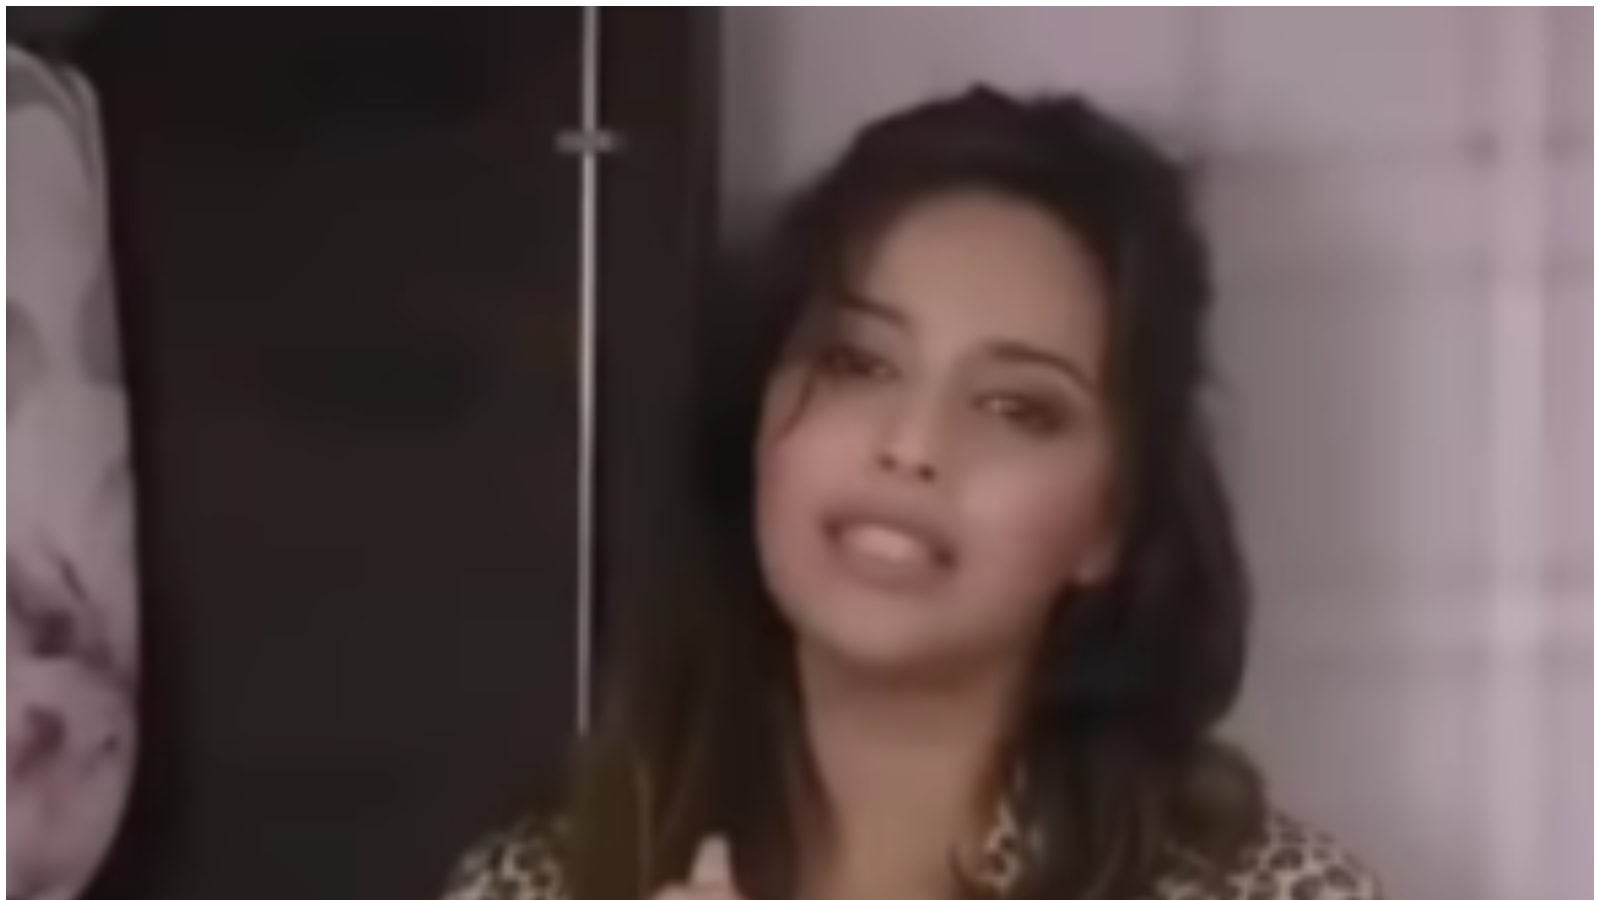 Swara Bhasker Says She Faces Online Trolling for Veere Di Wedding Masturbation Scene